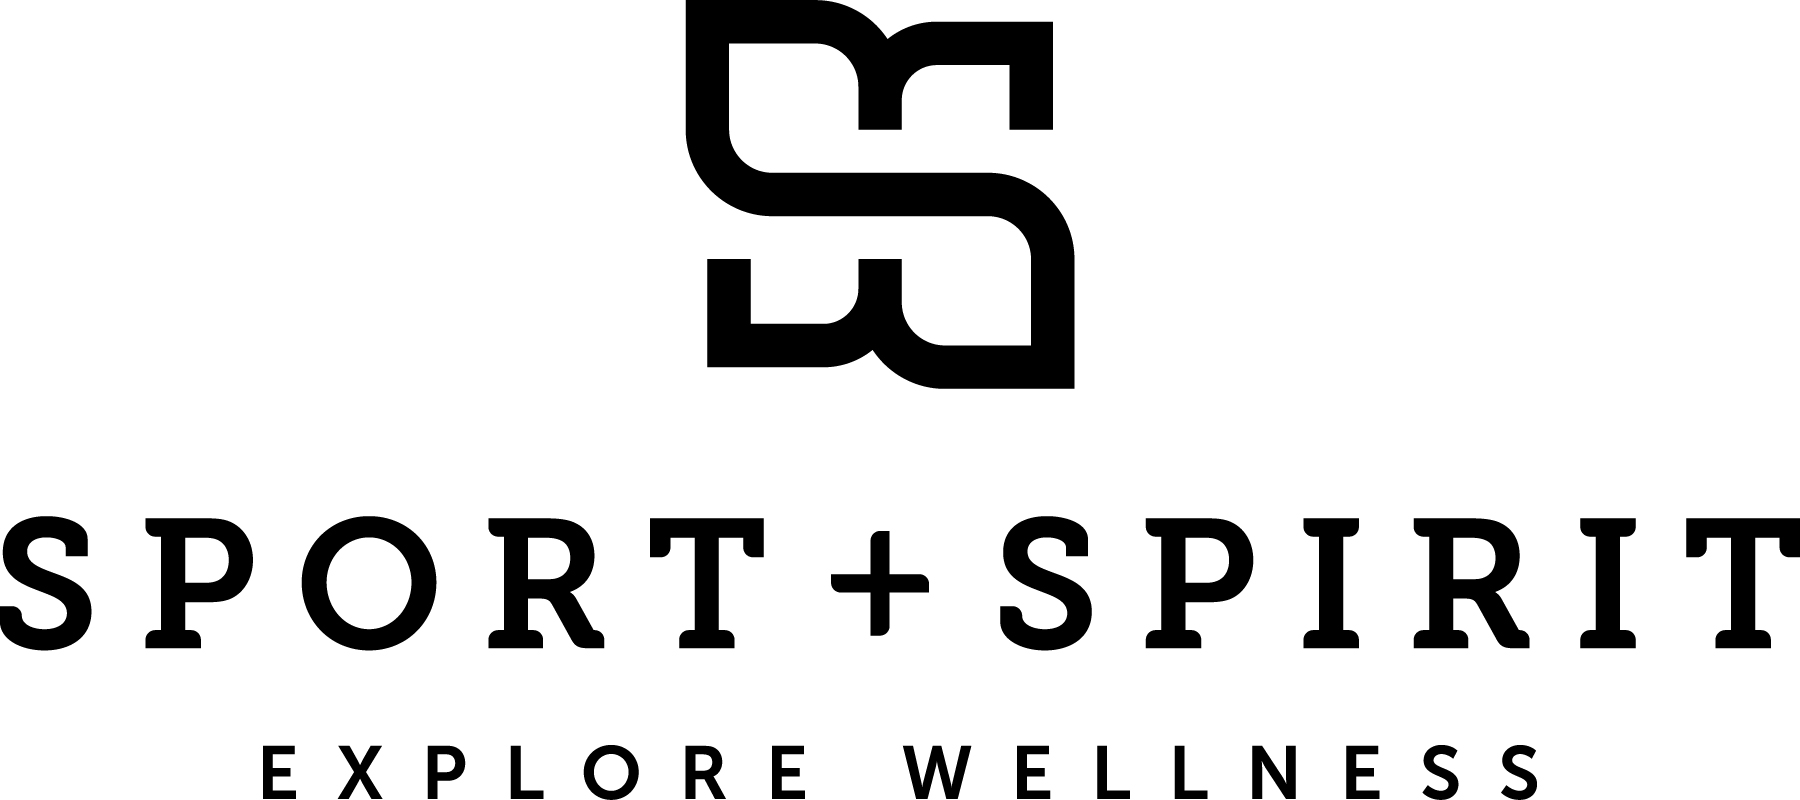 sport-and-spirit-logo